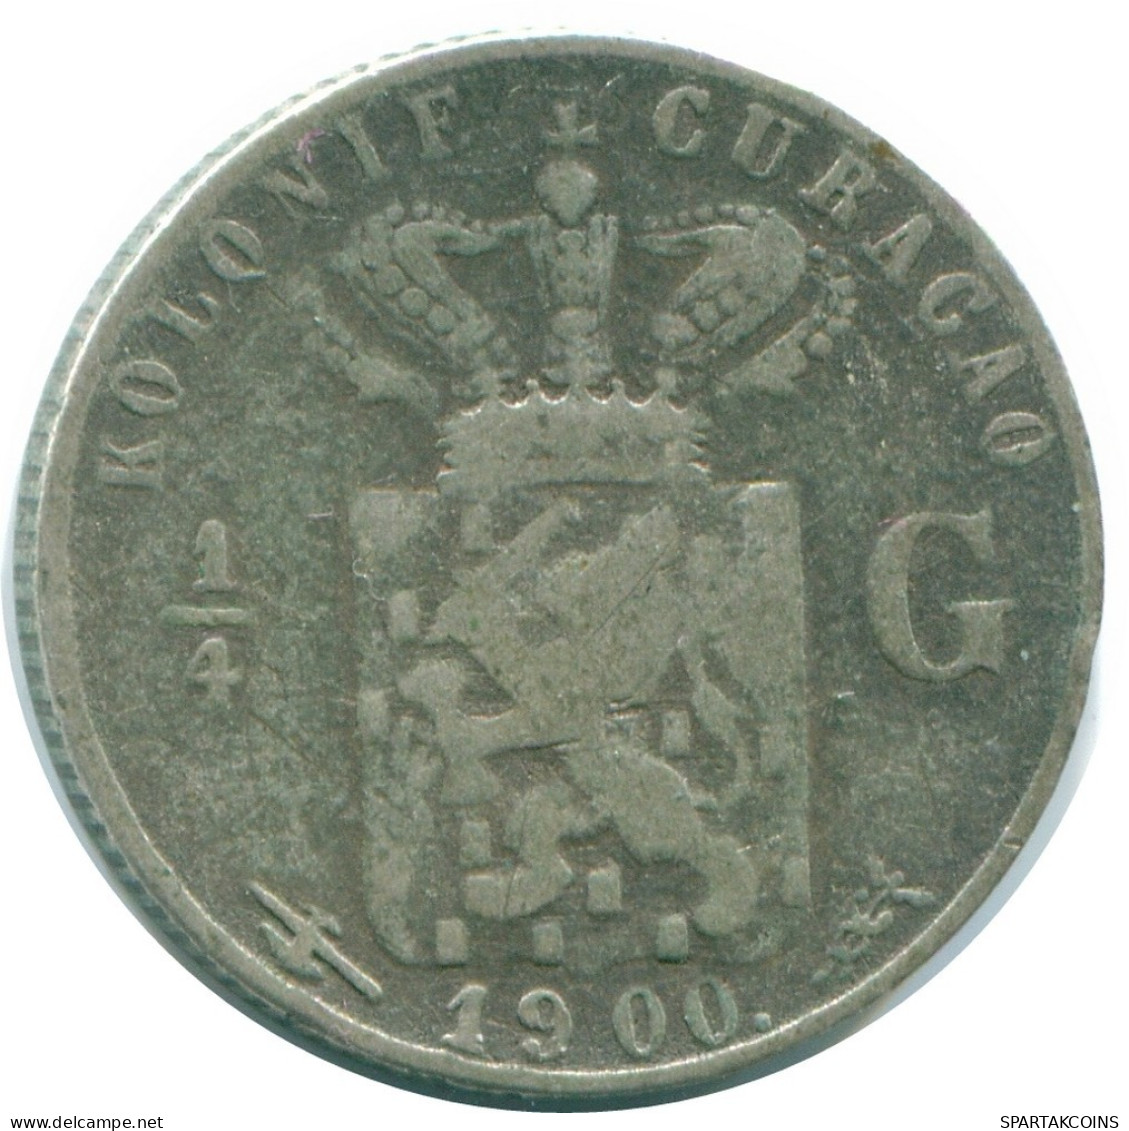 1/4 GULDEN 1900 CURACAO Netherlands SILVER Colonial Coin #NL10473.4.U.A - Curacao